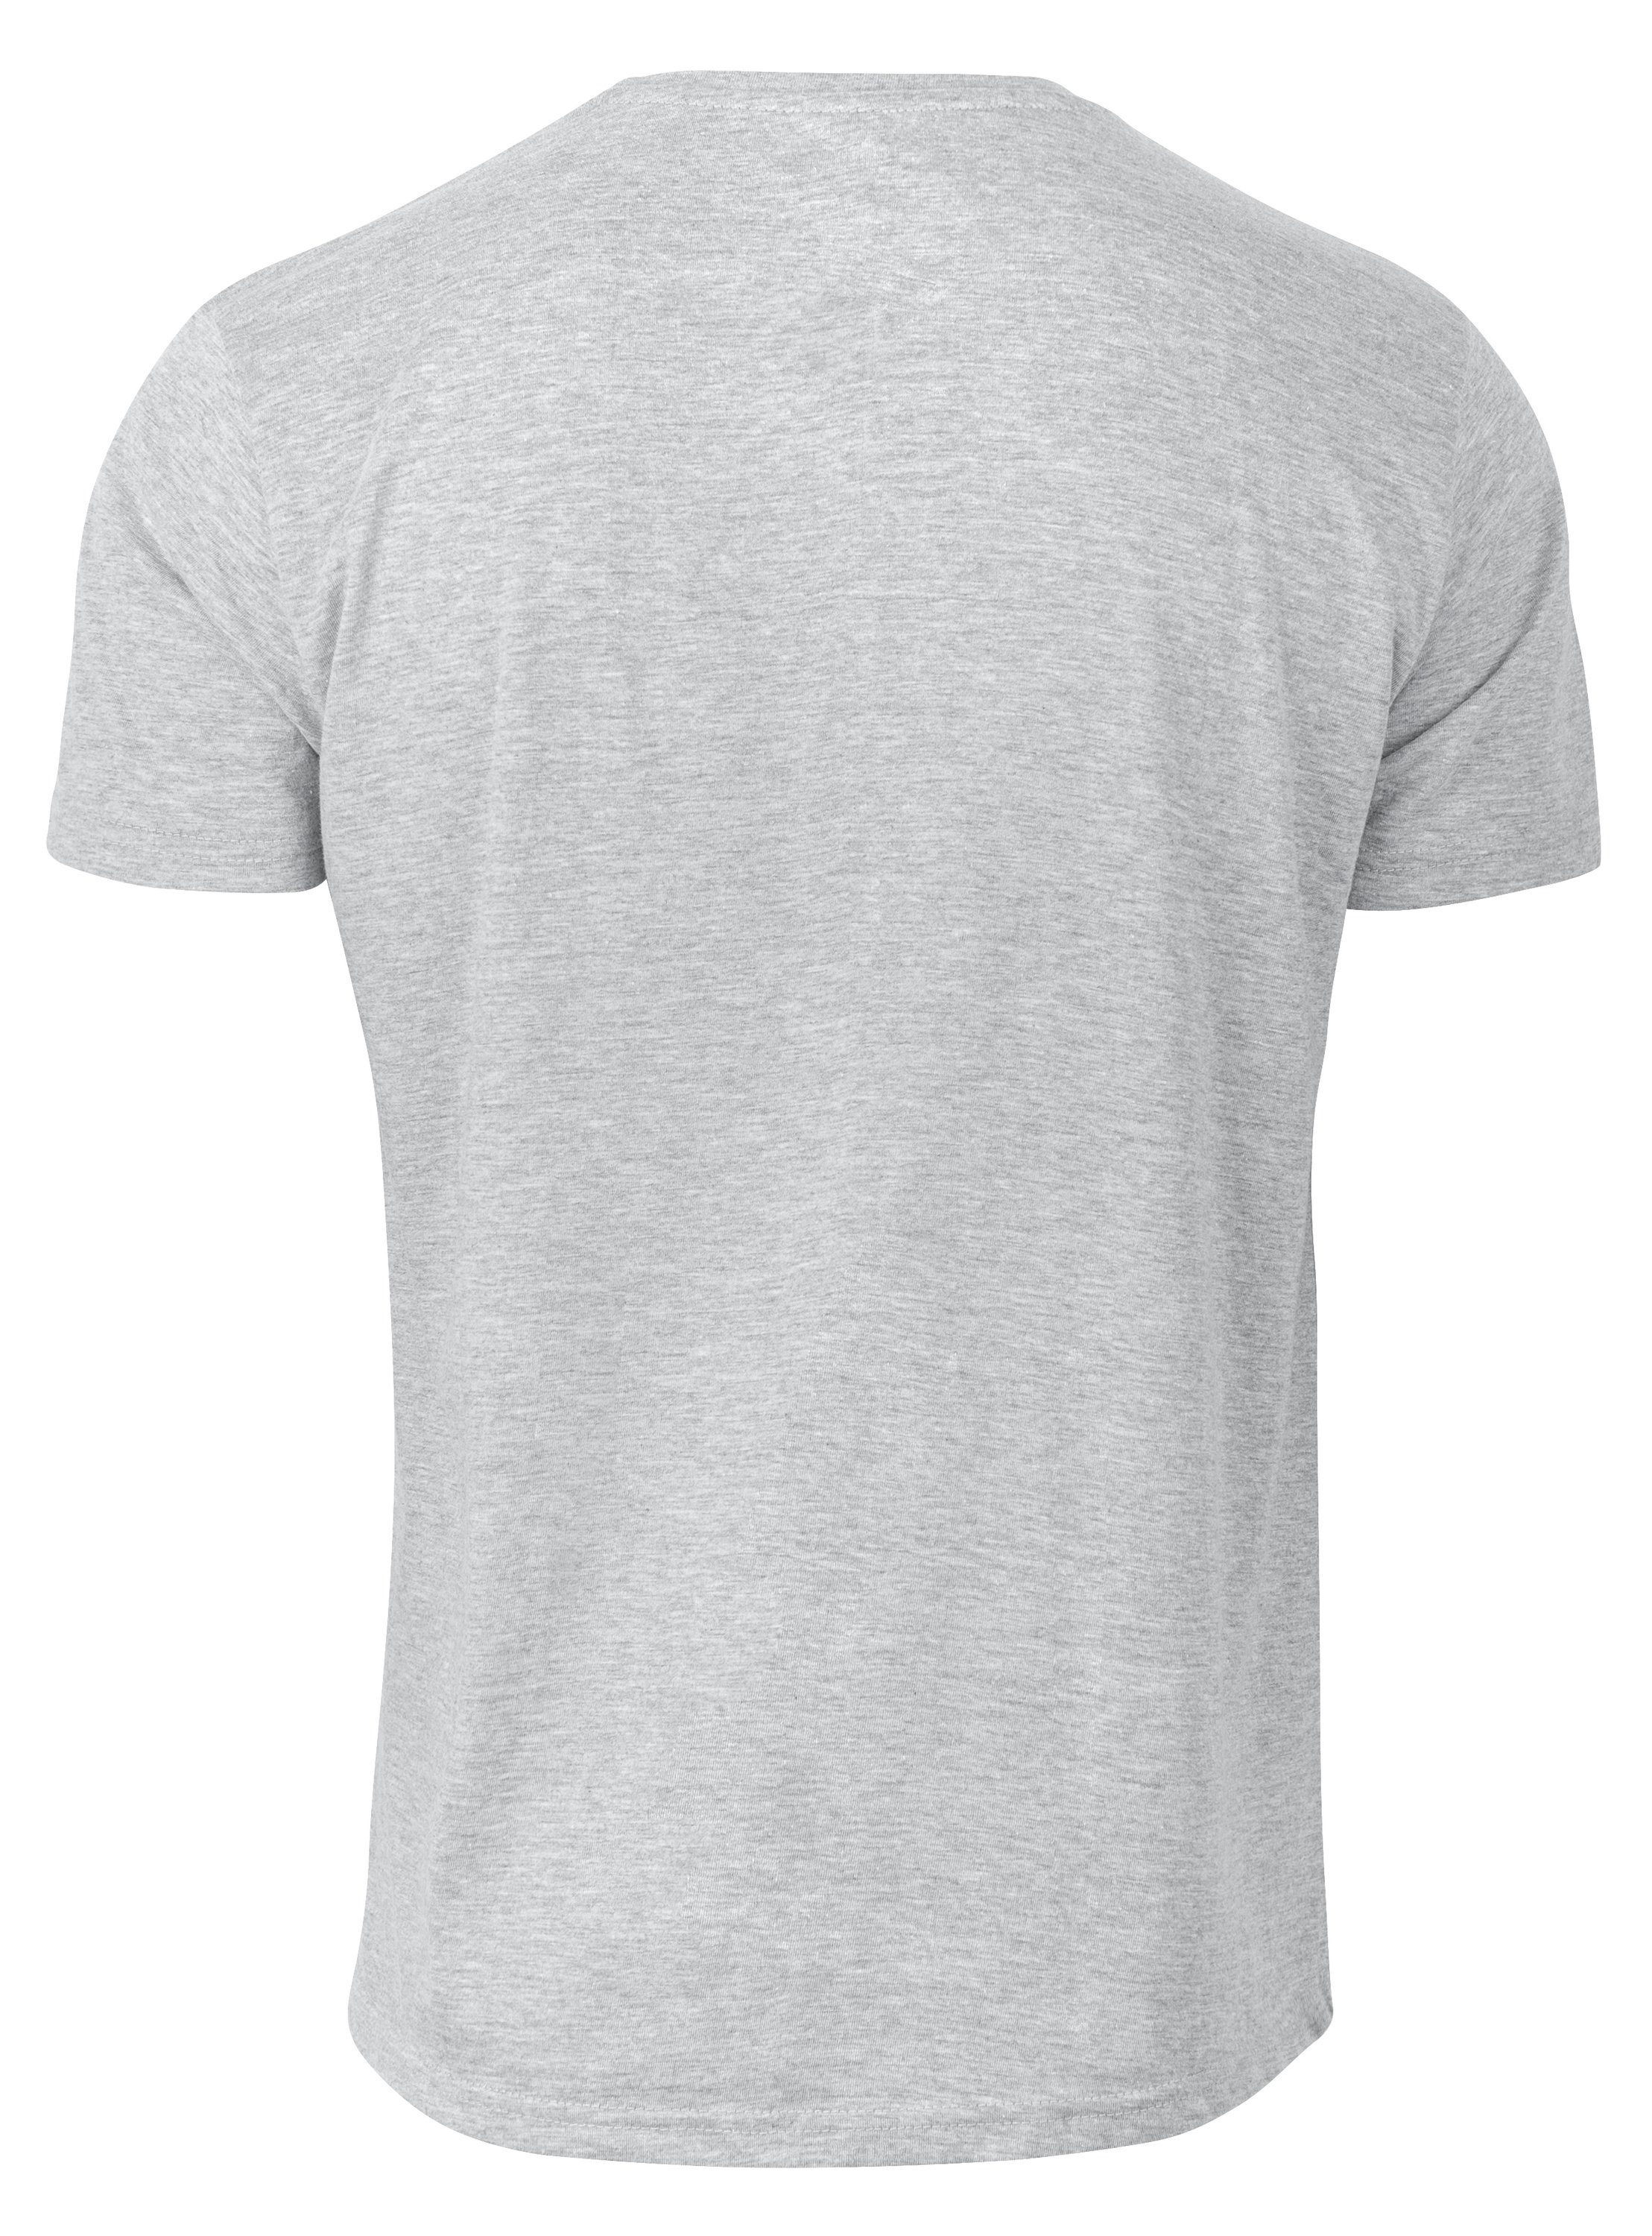 Cotton Prime® T-Shirt Opa grau der Enkel Legende